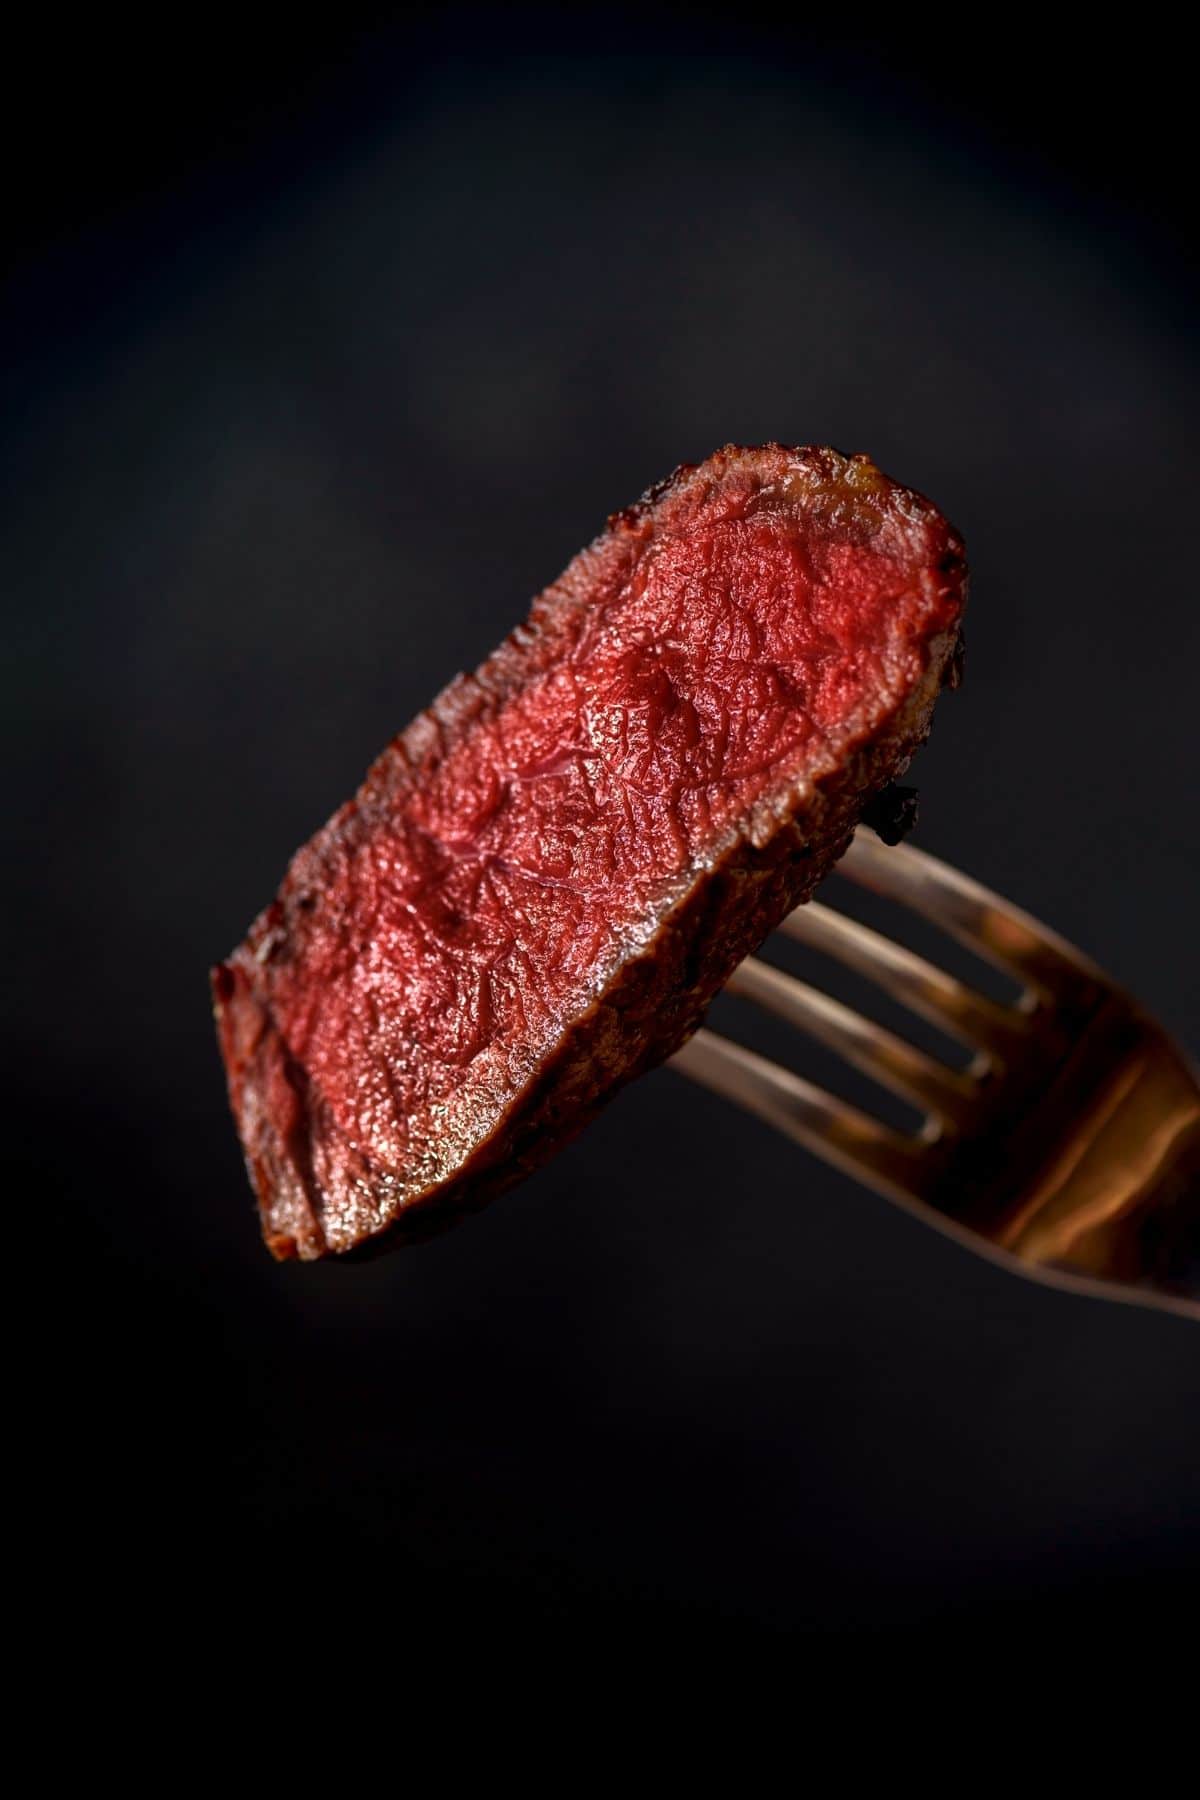 Rare Steak